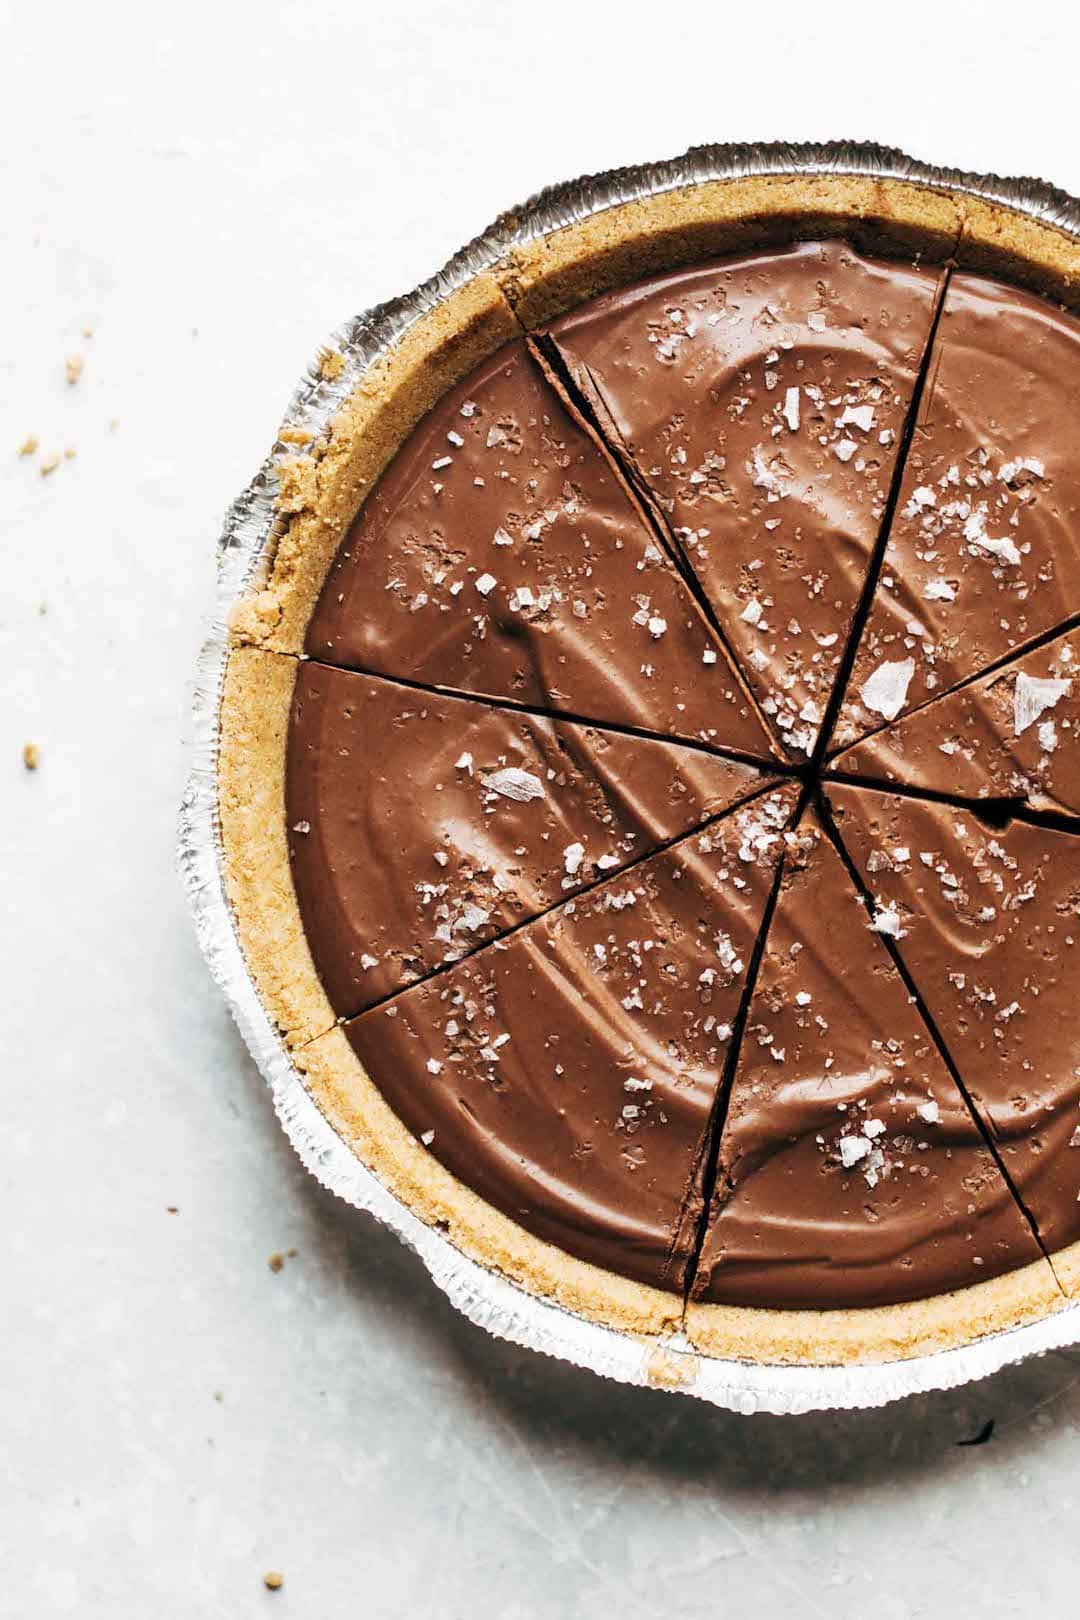 12 Super Easy Plant Based Desserts - Vegan Chocolate Pie